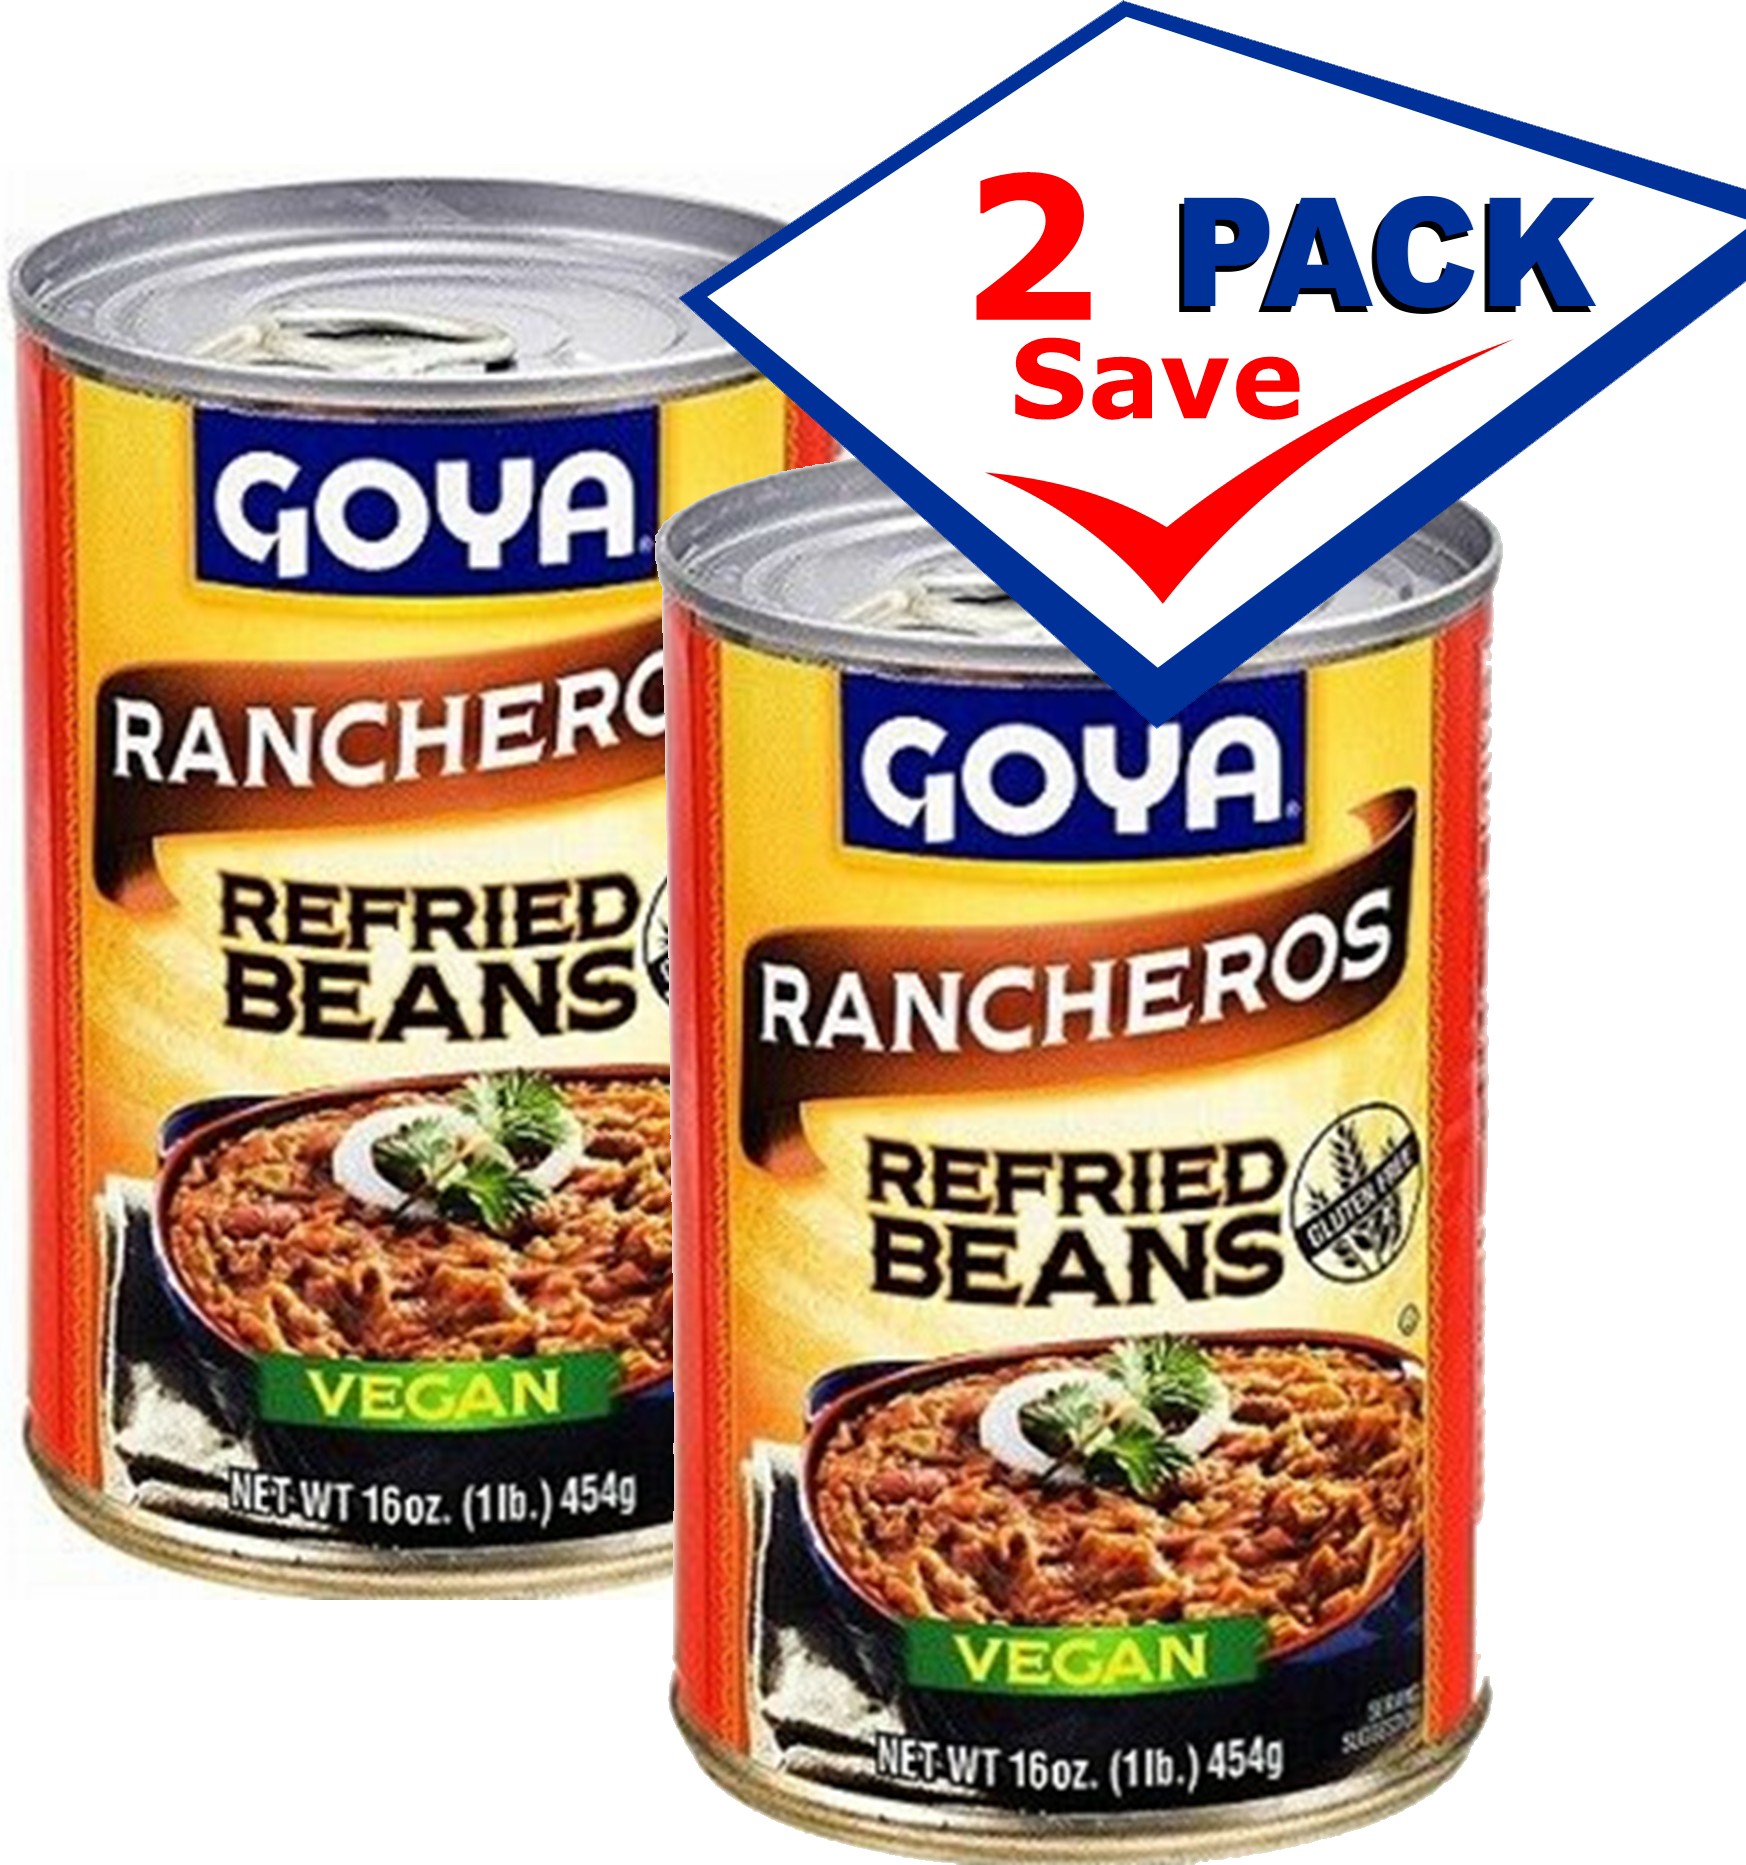 Ranchero Refried Beans by Goya 16 oz Pack of 2